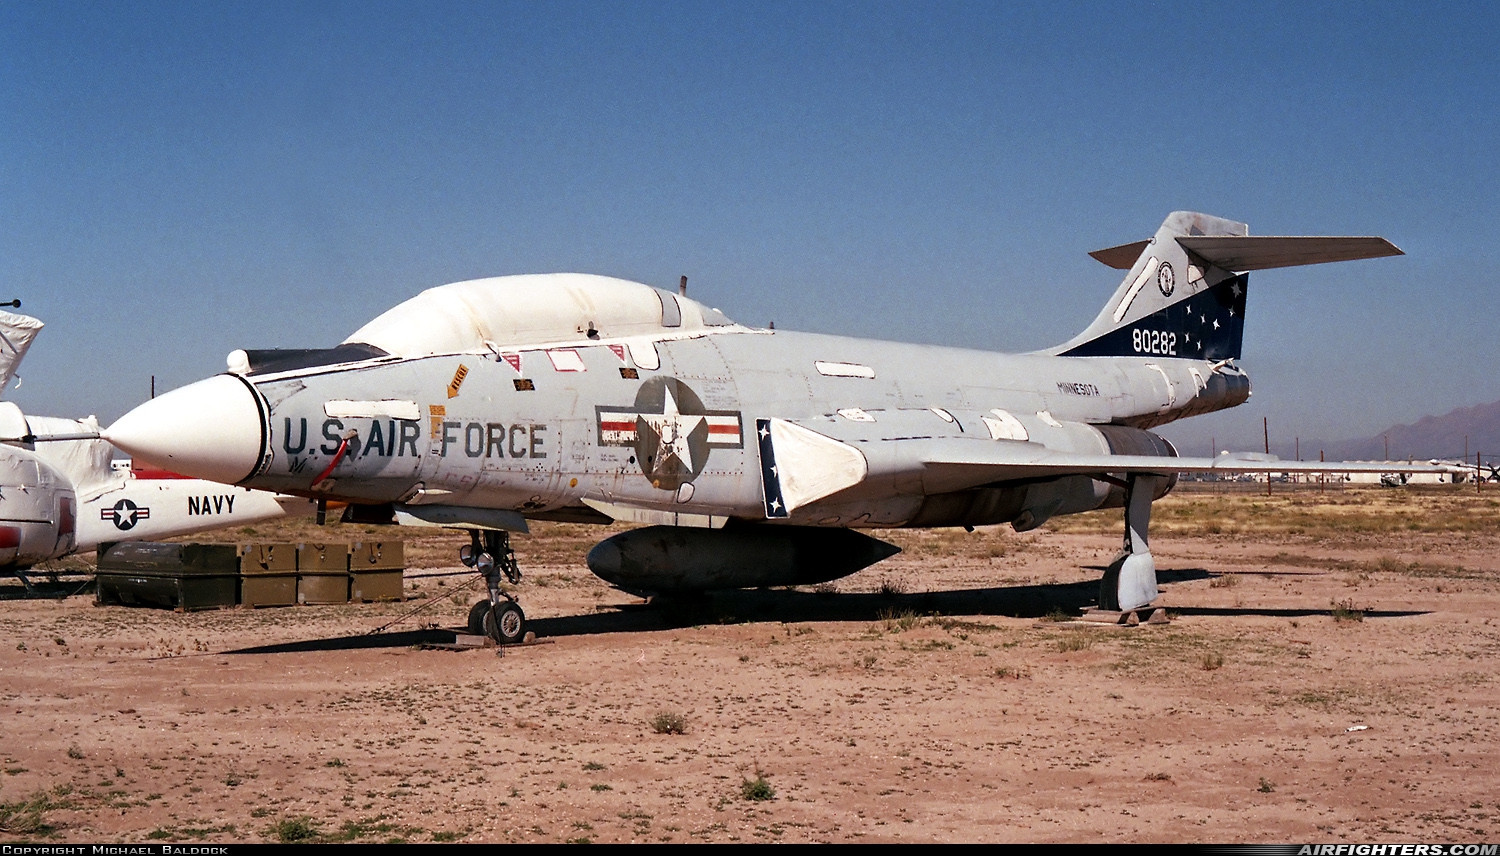 USA - Air Force McDonnell F-101B Voodoo 58-0282 at Tucson - Davis-Monthan AFB (DMA / KDMA), USA